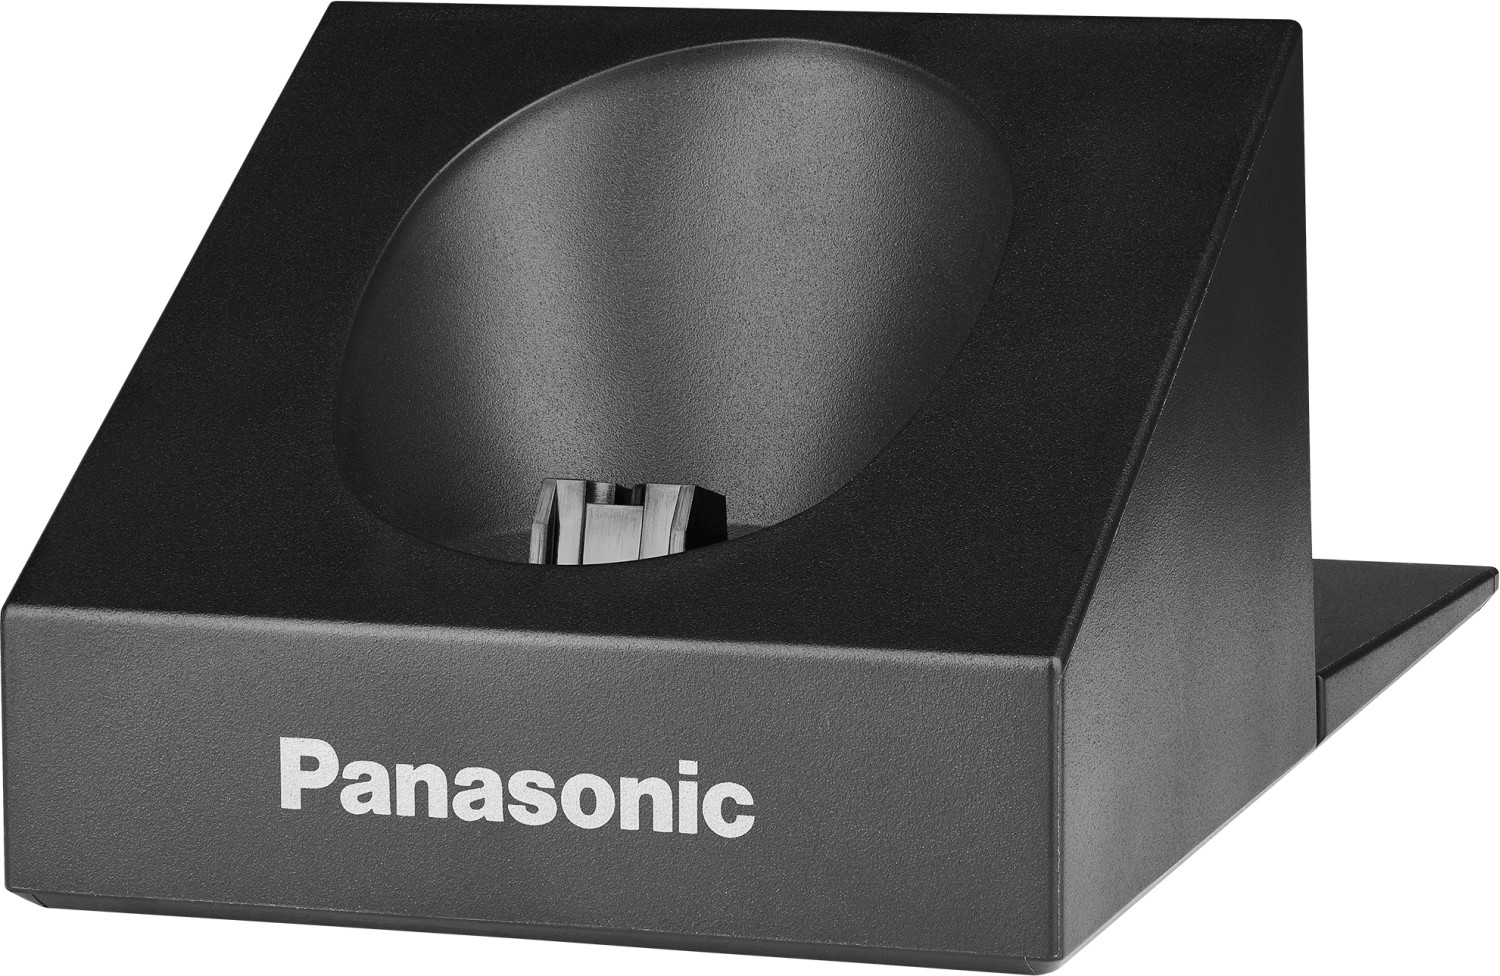  Panasonic ER-GP84 Gold Limited Edition 